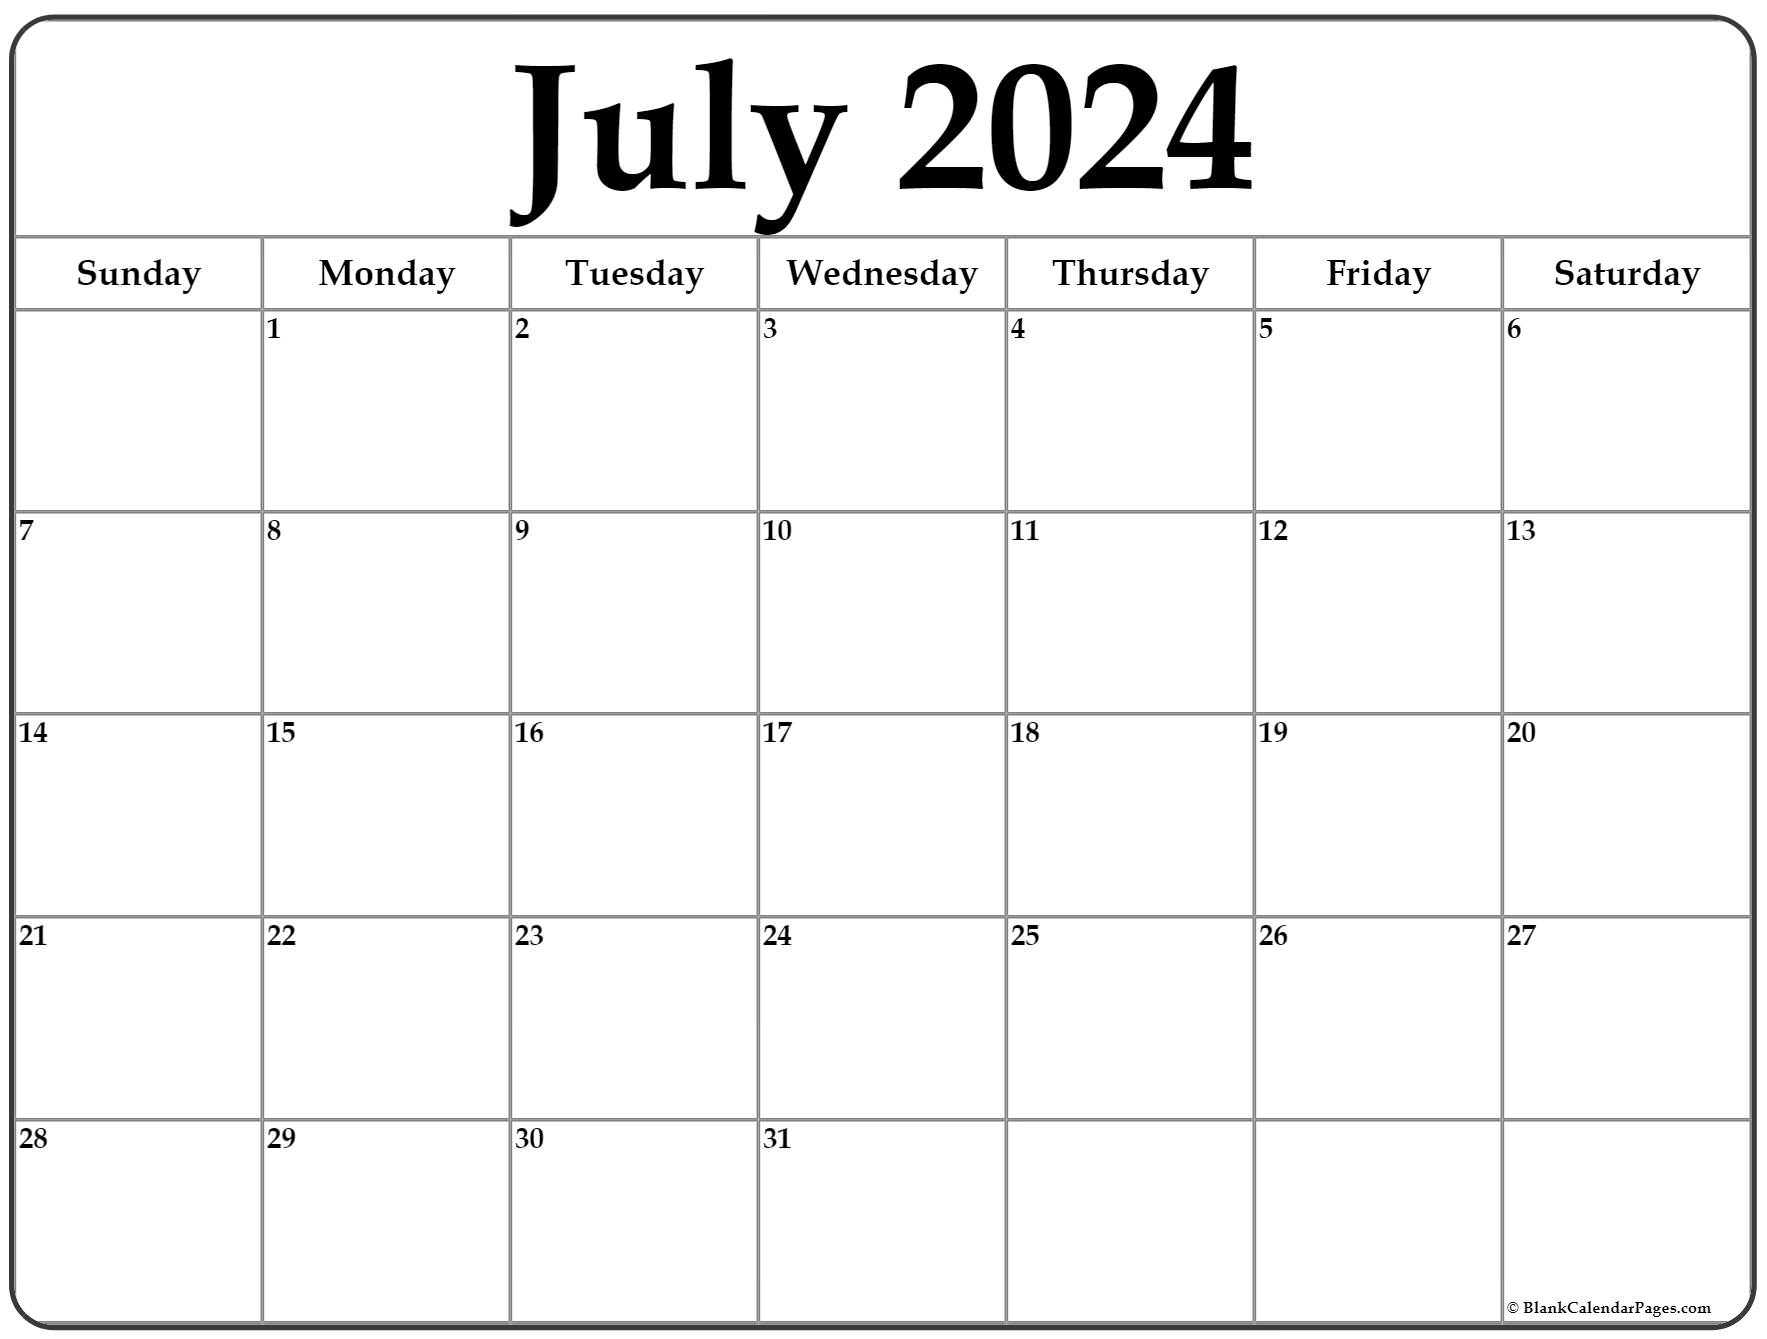 Print A Calendar July 2022 July 2022 Calendar | Free Printable Calendar Templates